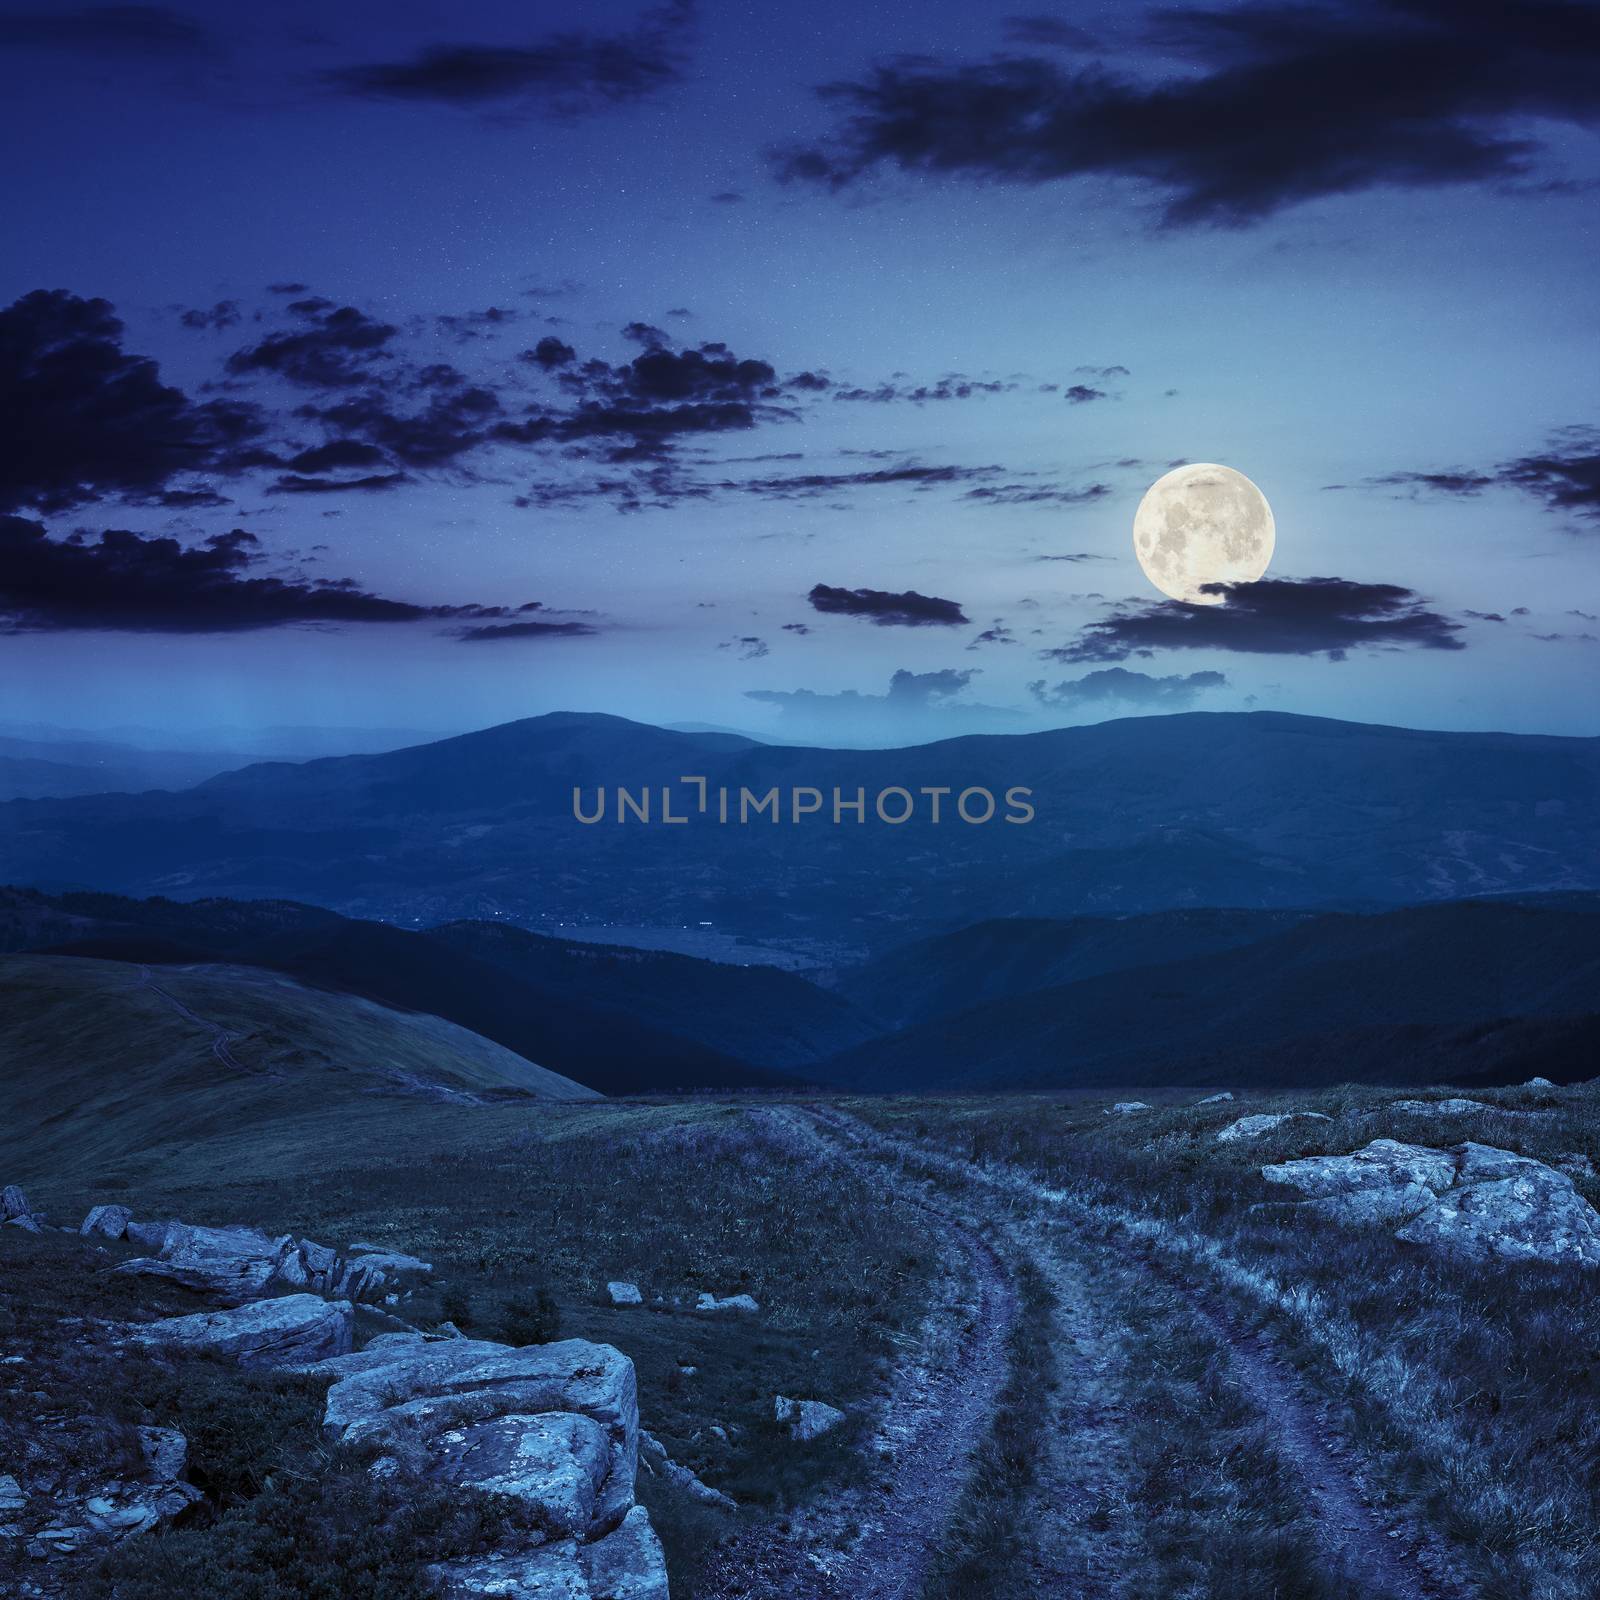 road among white sharp stones on the hillside on top of mountain range at night in full moon light